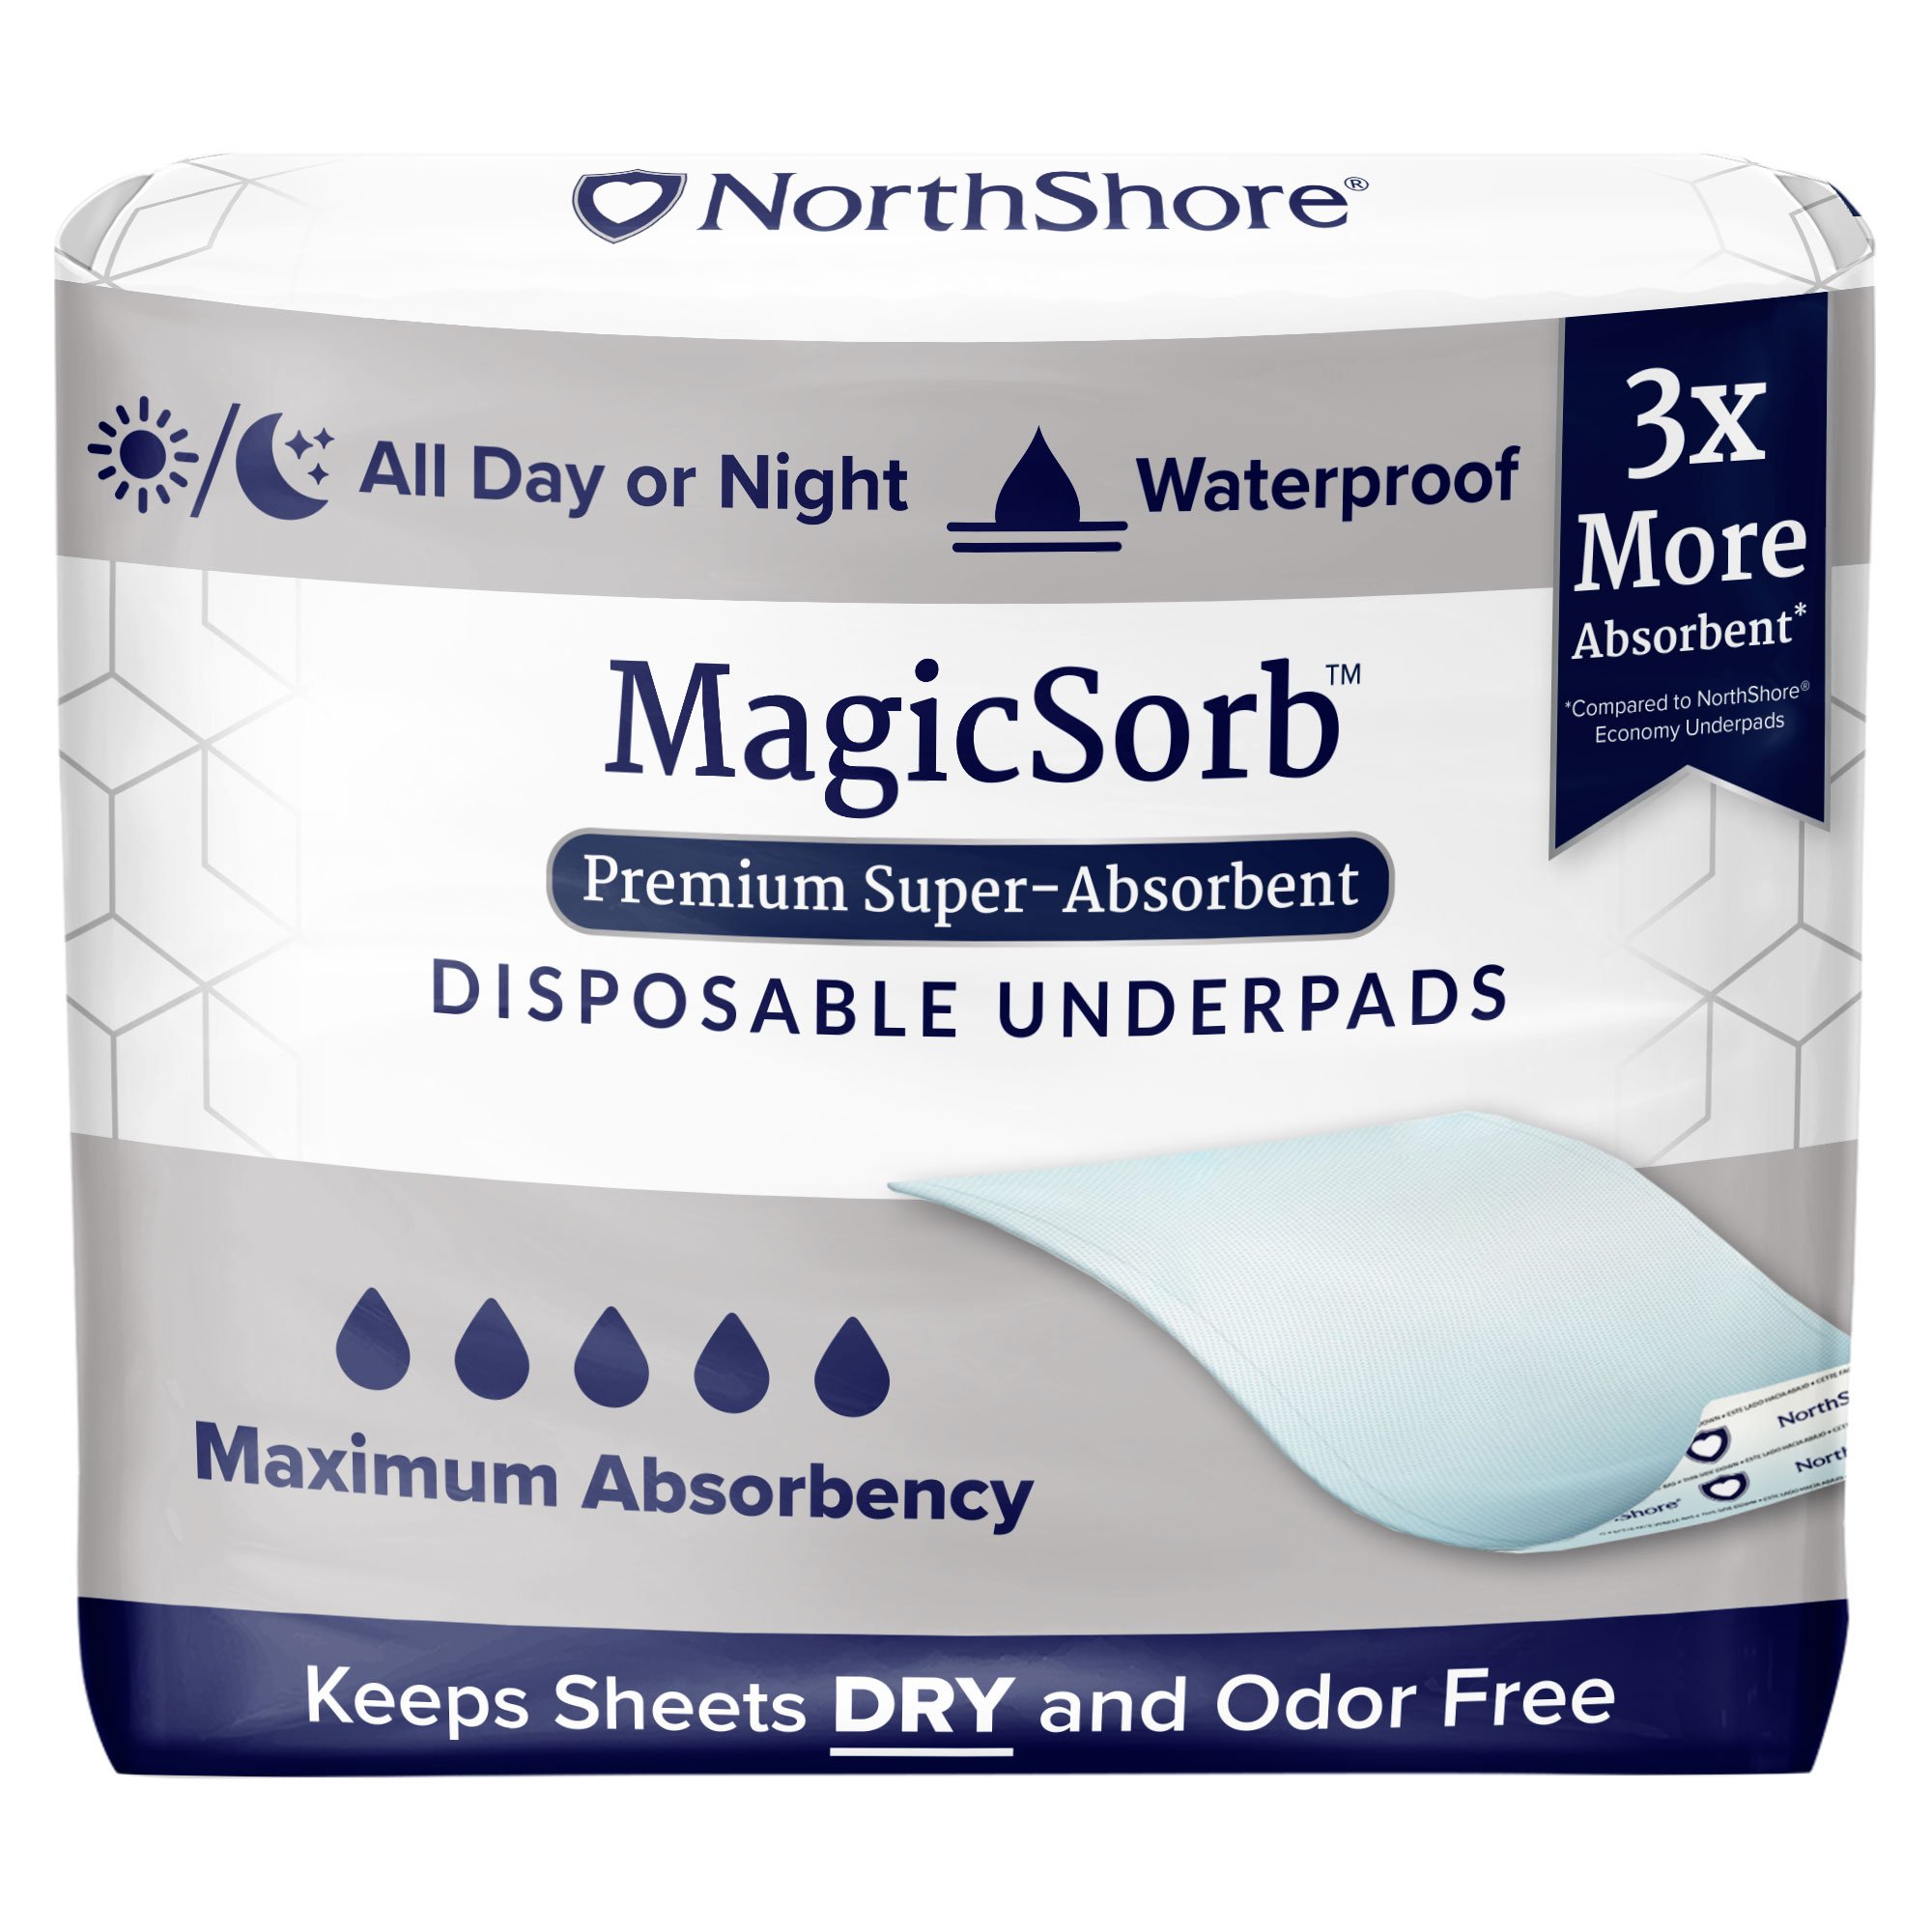 NorthShore MagicSorb Disposable Underpads